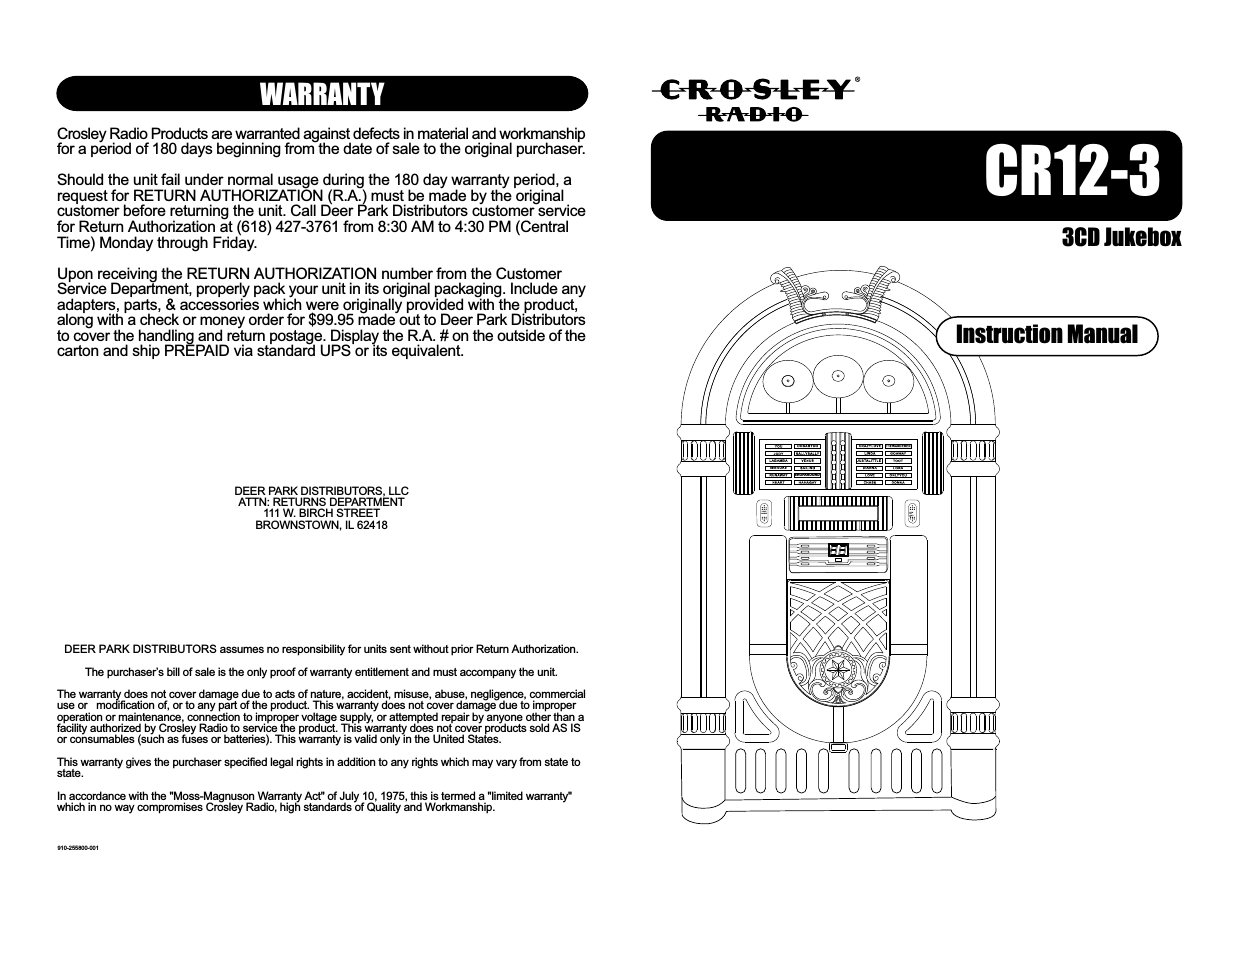 Crosley Full Size Jukebox CR12-3